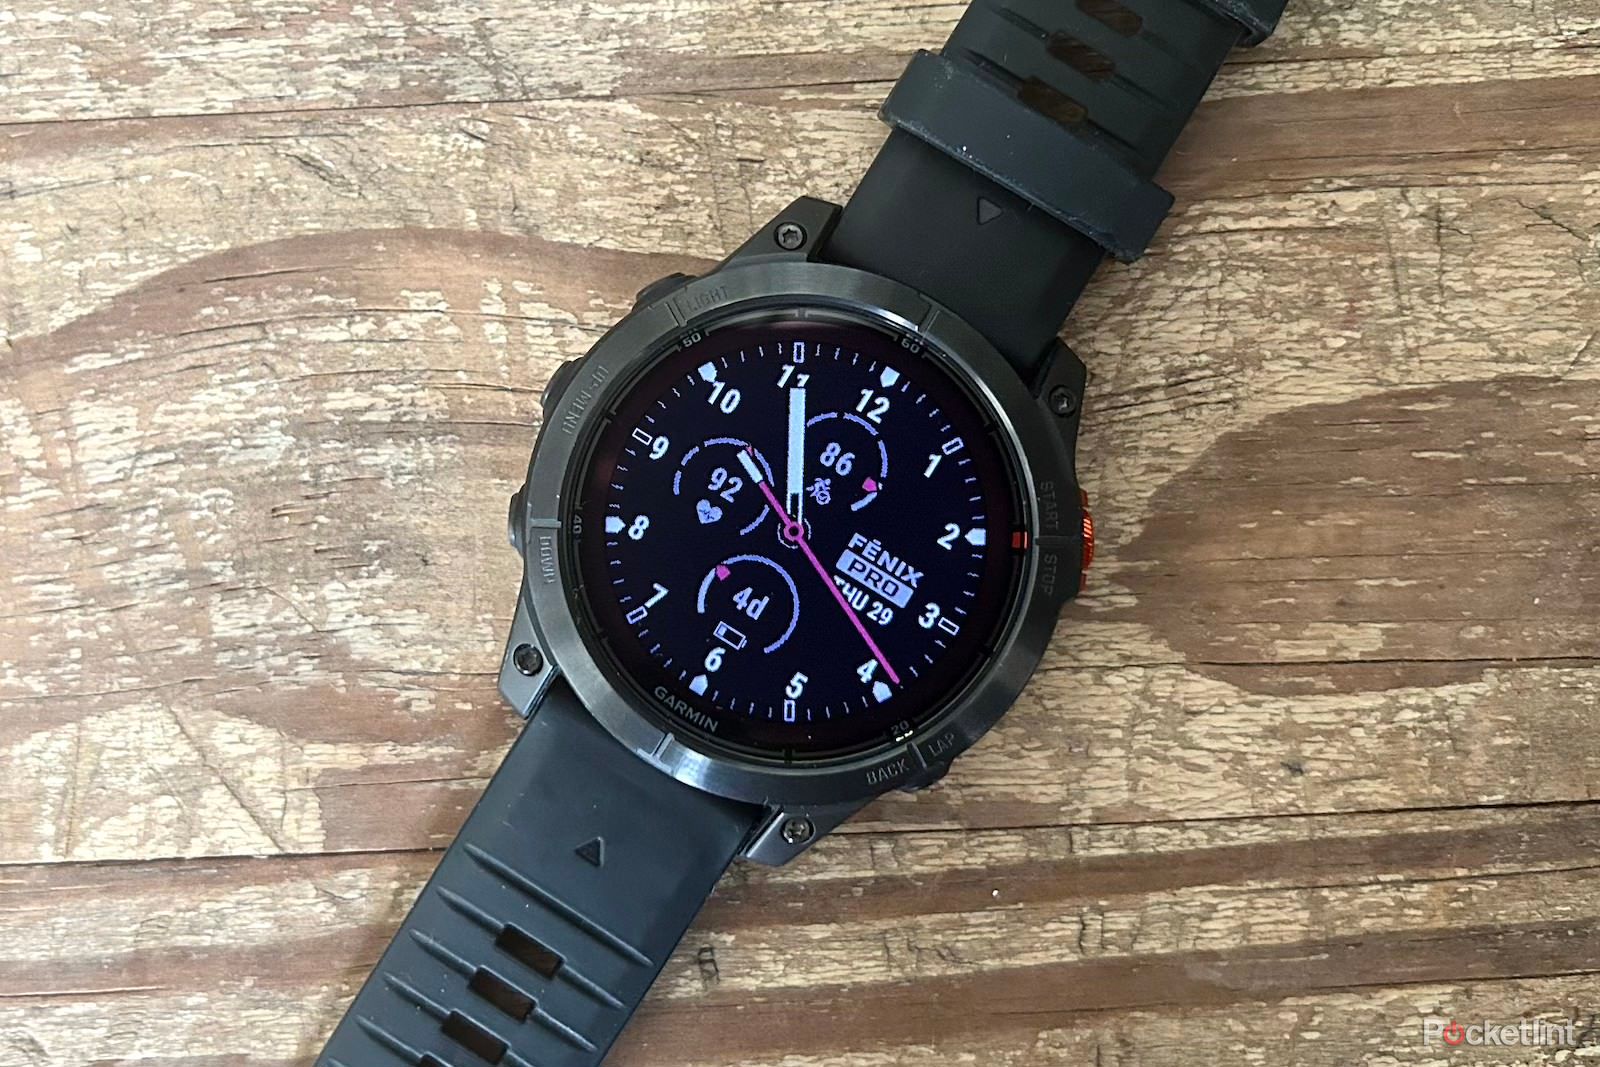 GARMIN 7 Pro Solar Edition Black / Smartwatch 47mm